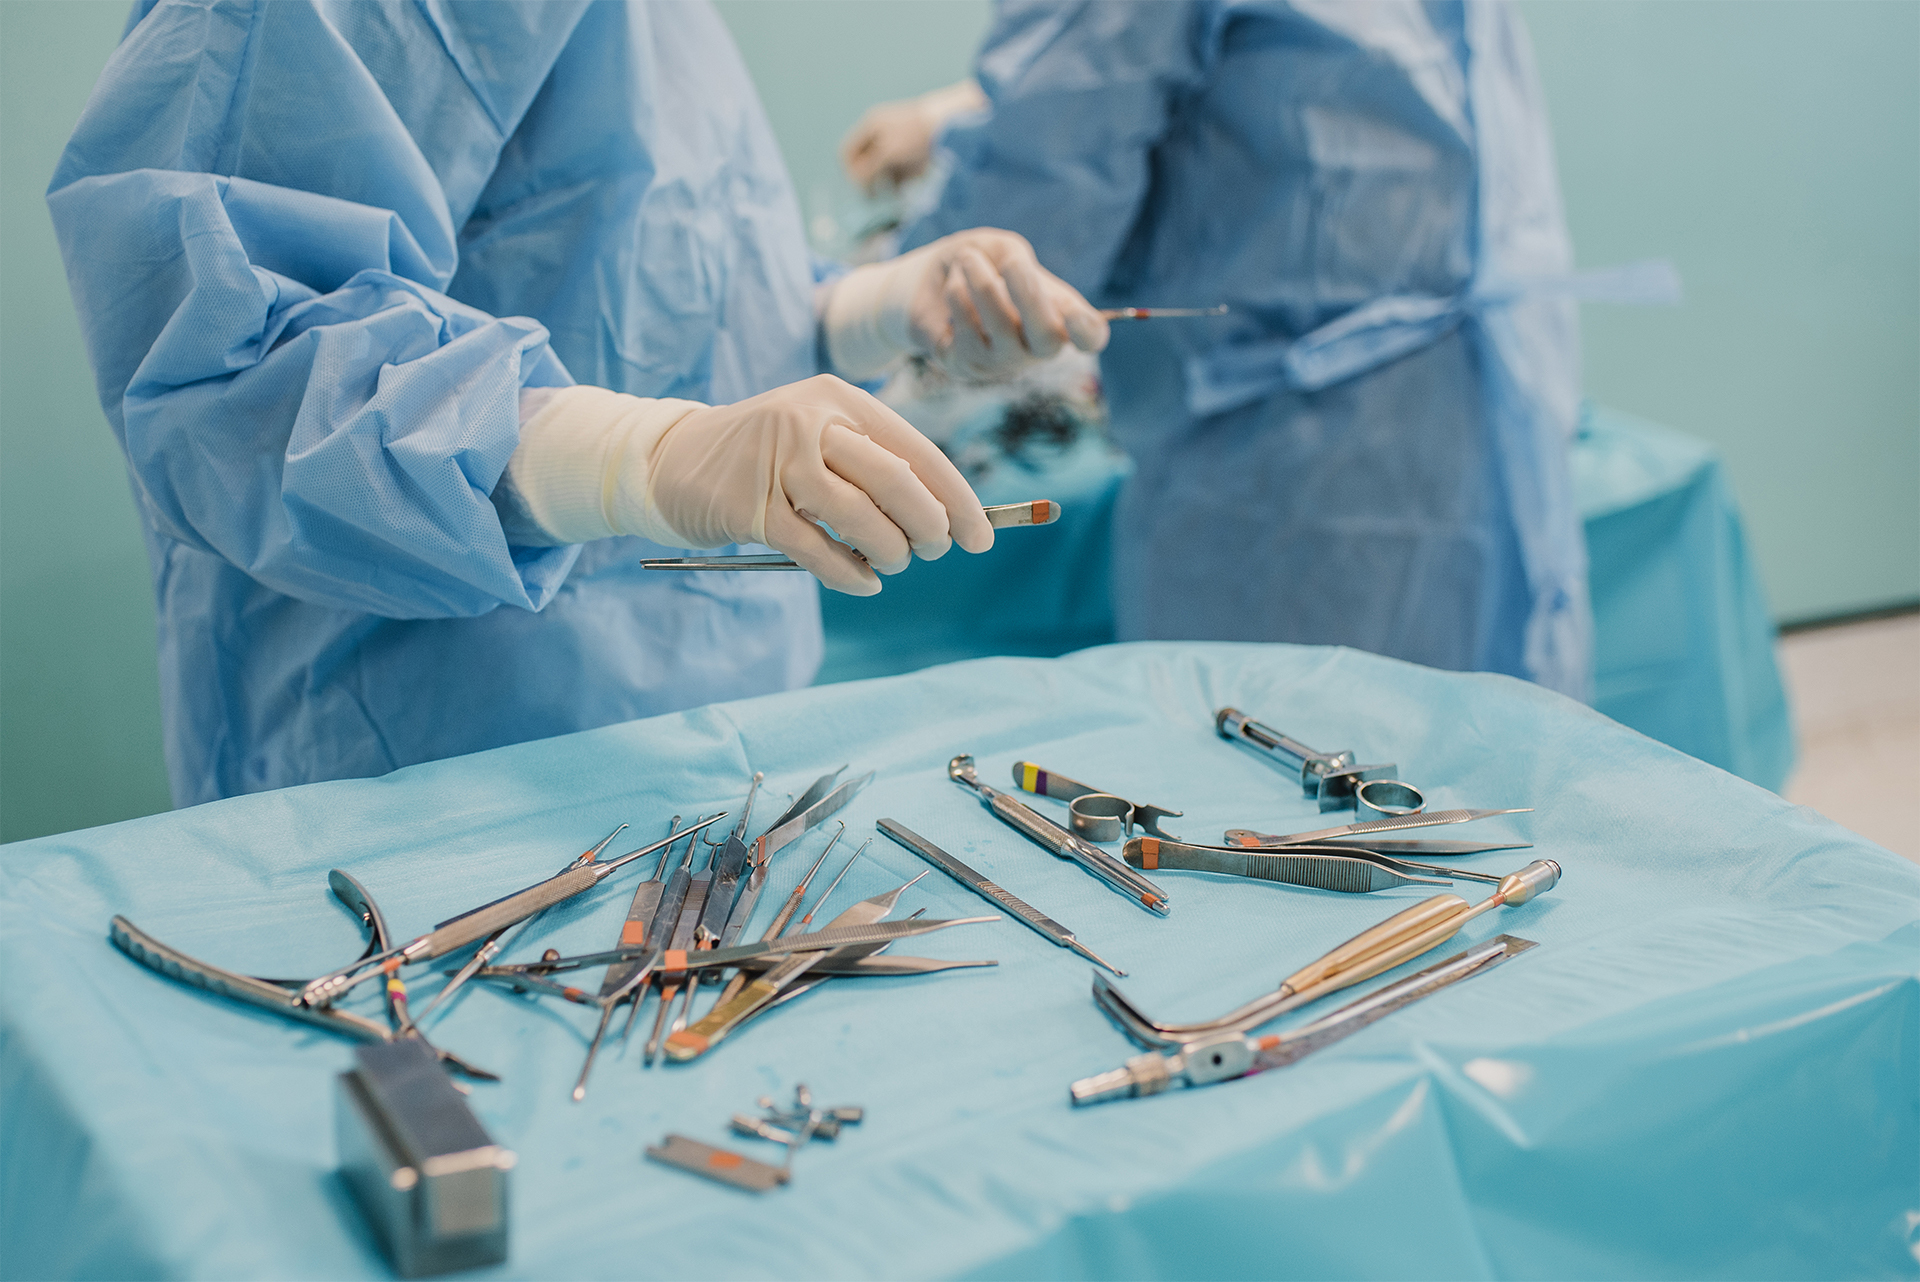 medical-team-preparing-surgical-equipment-for-oper-2022-09-30-14-51-50-utc-1